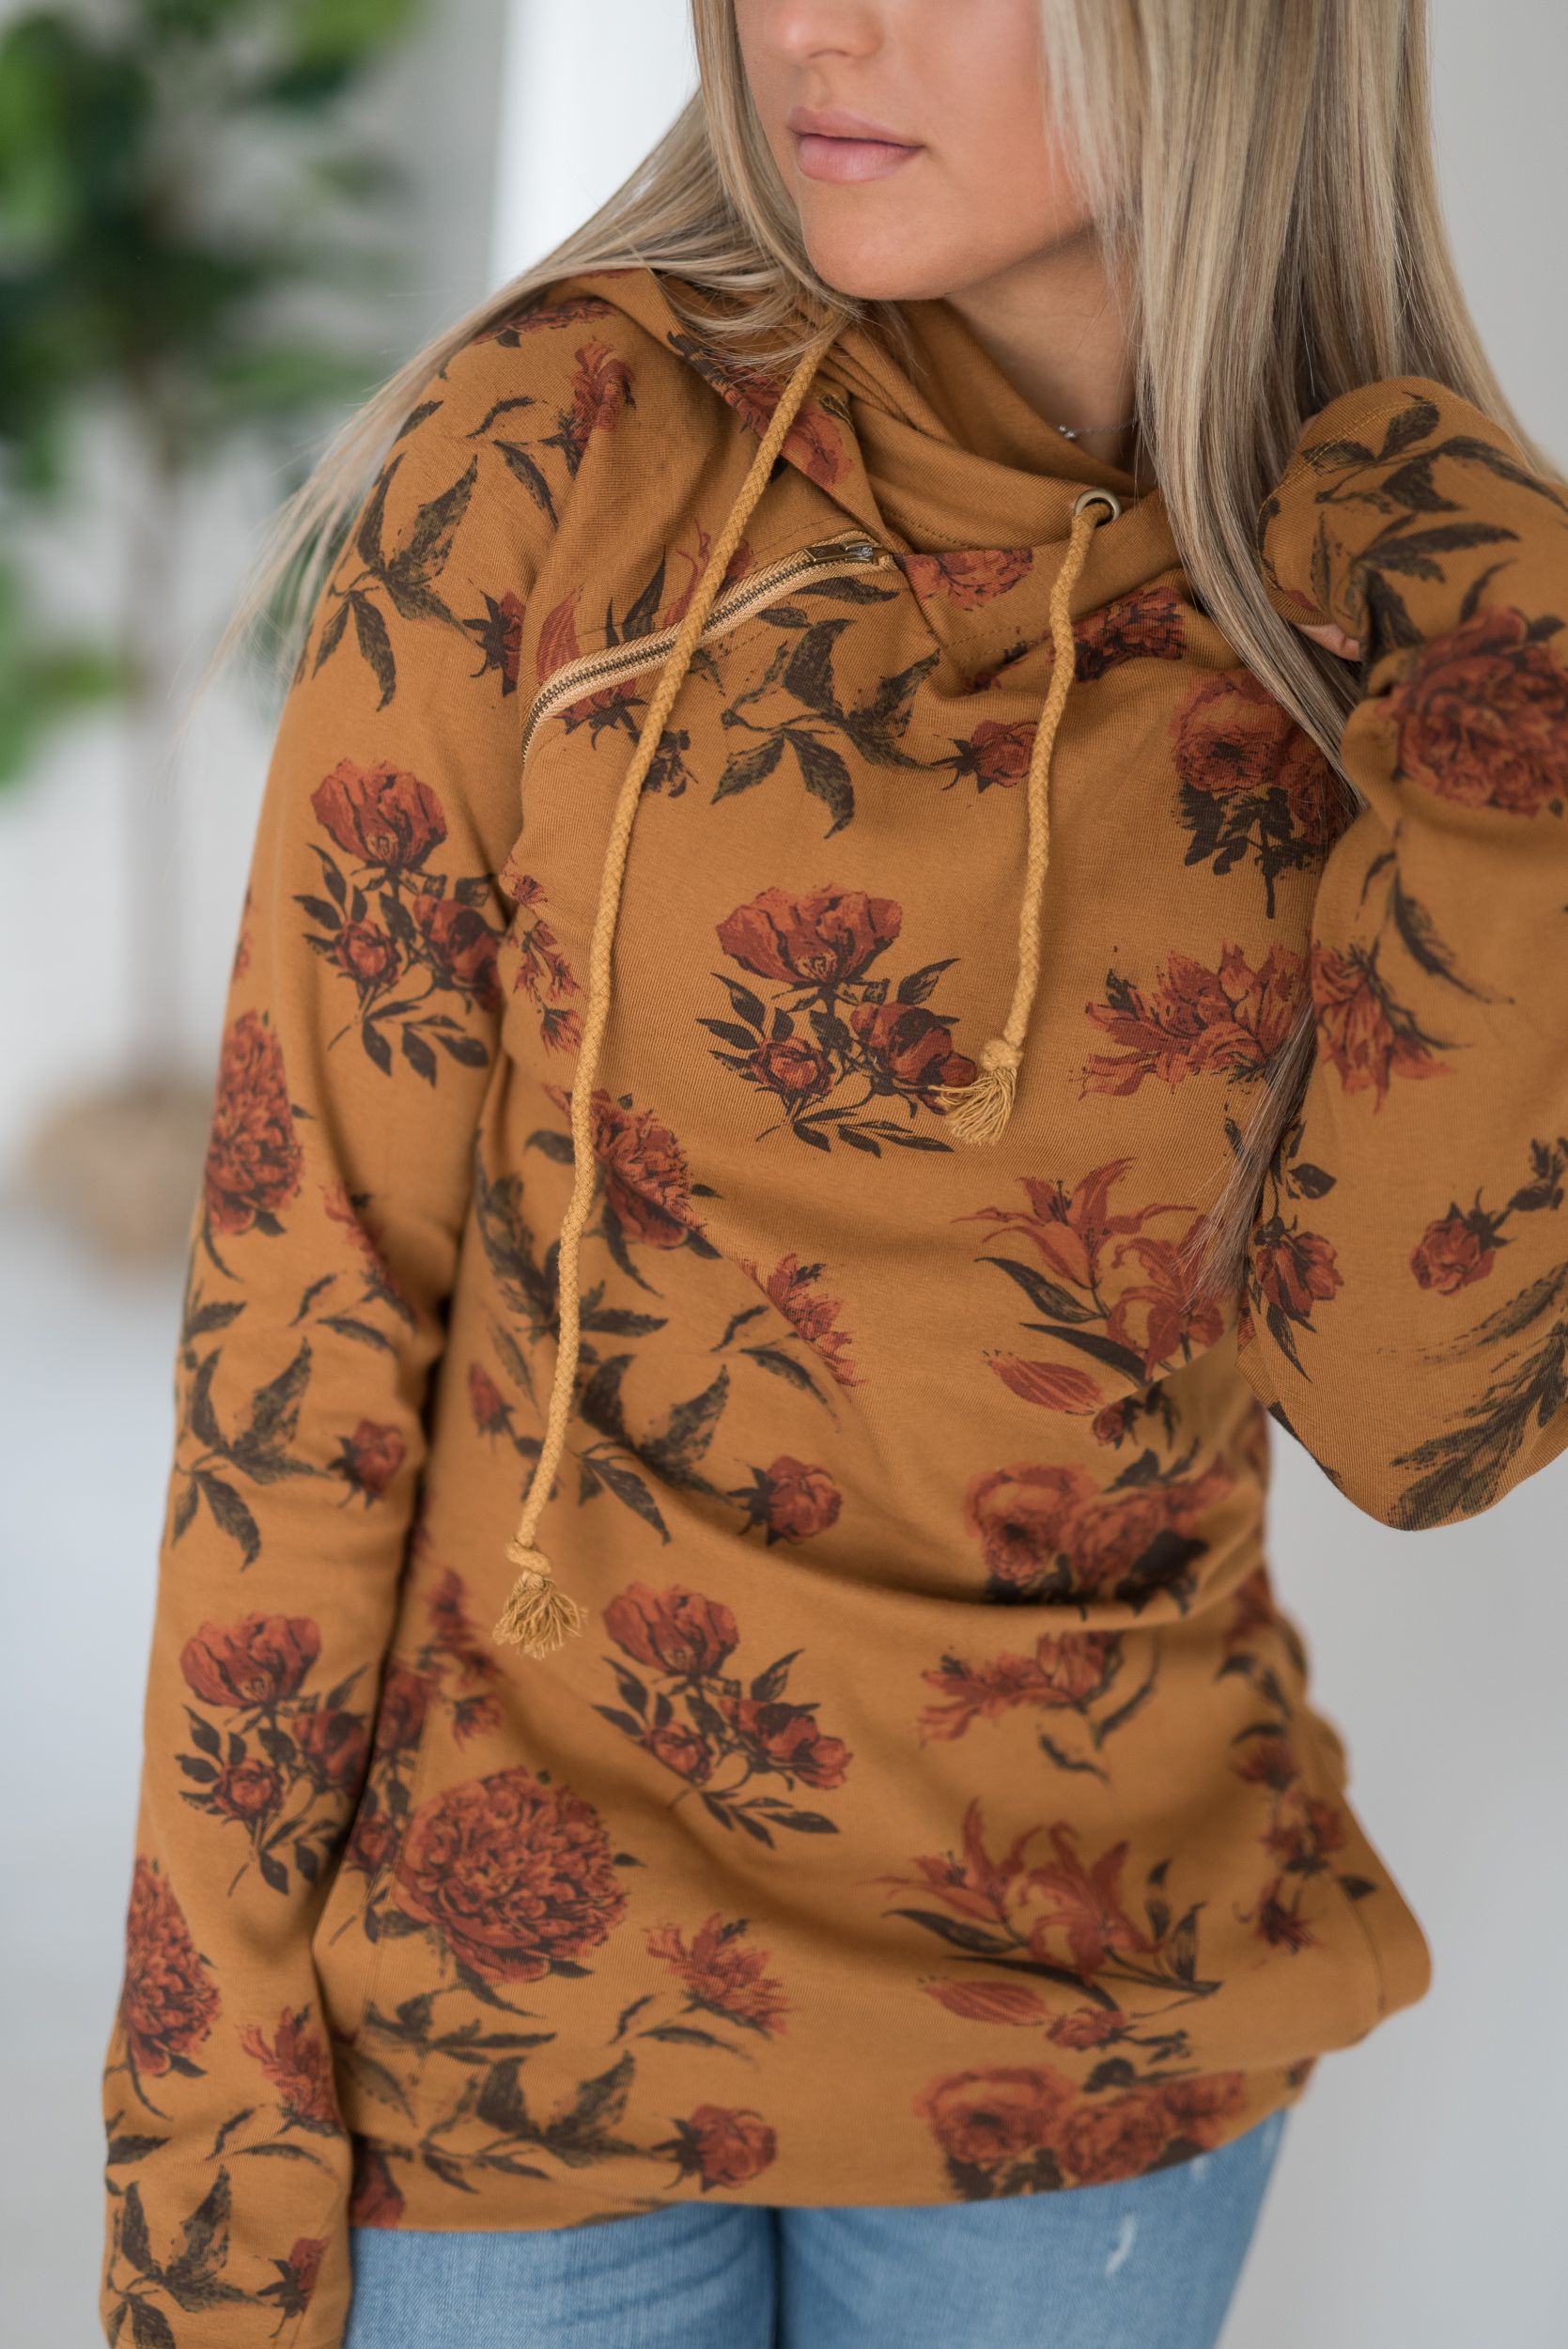 Ampersand Avenue DoubleHood Sweatshirt - Mustard Vintage Floral